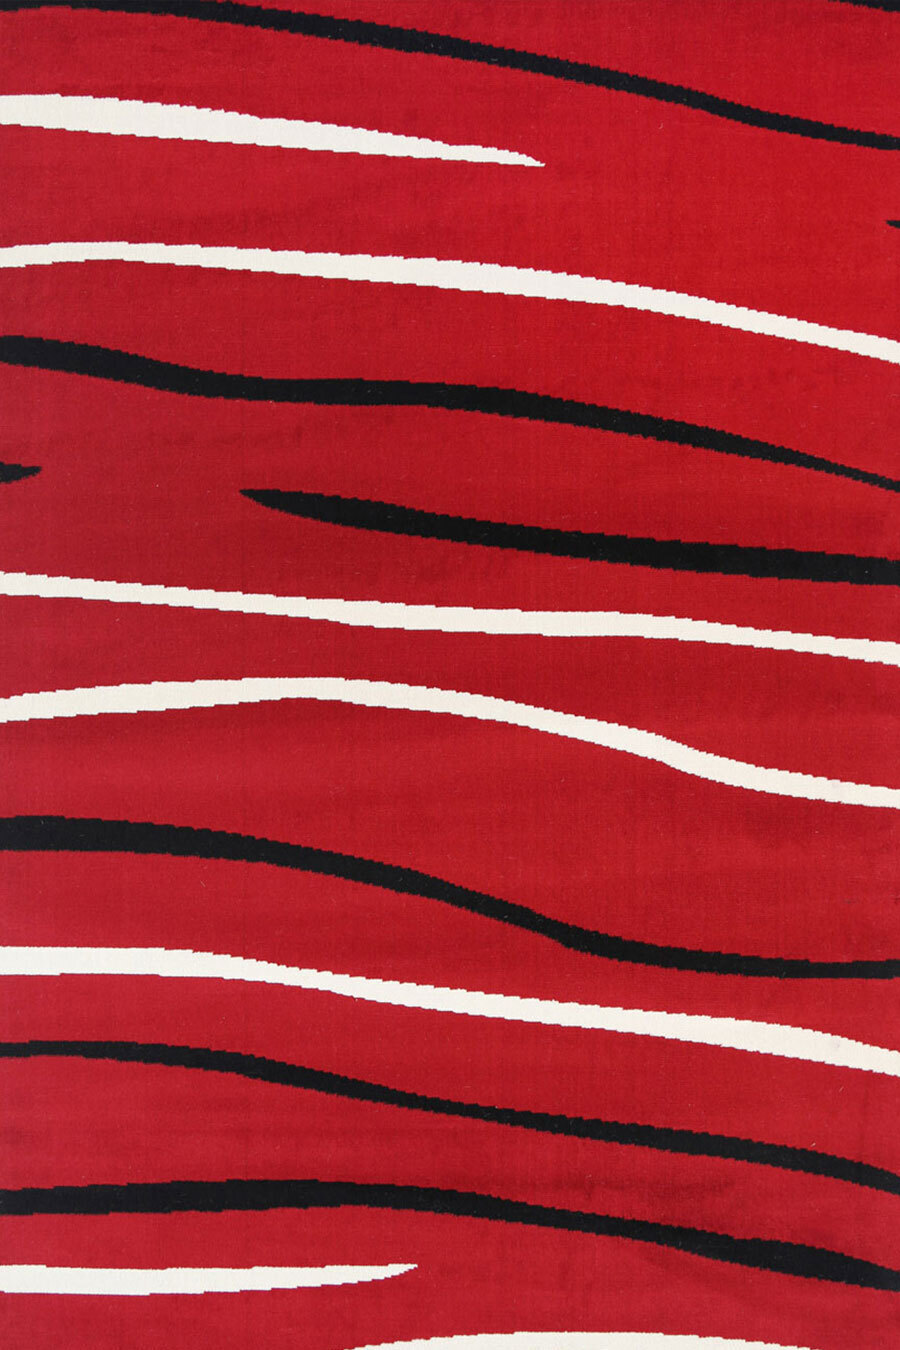 Emma Red Modern Striped Rug